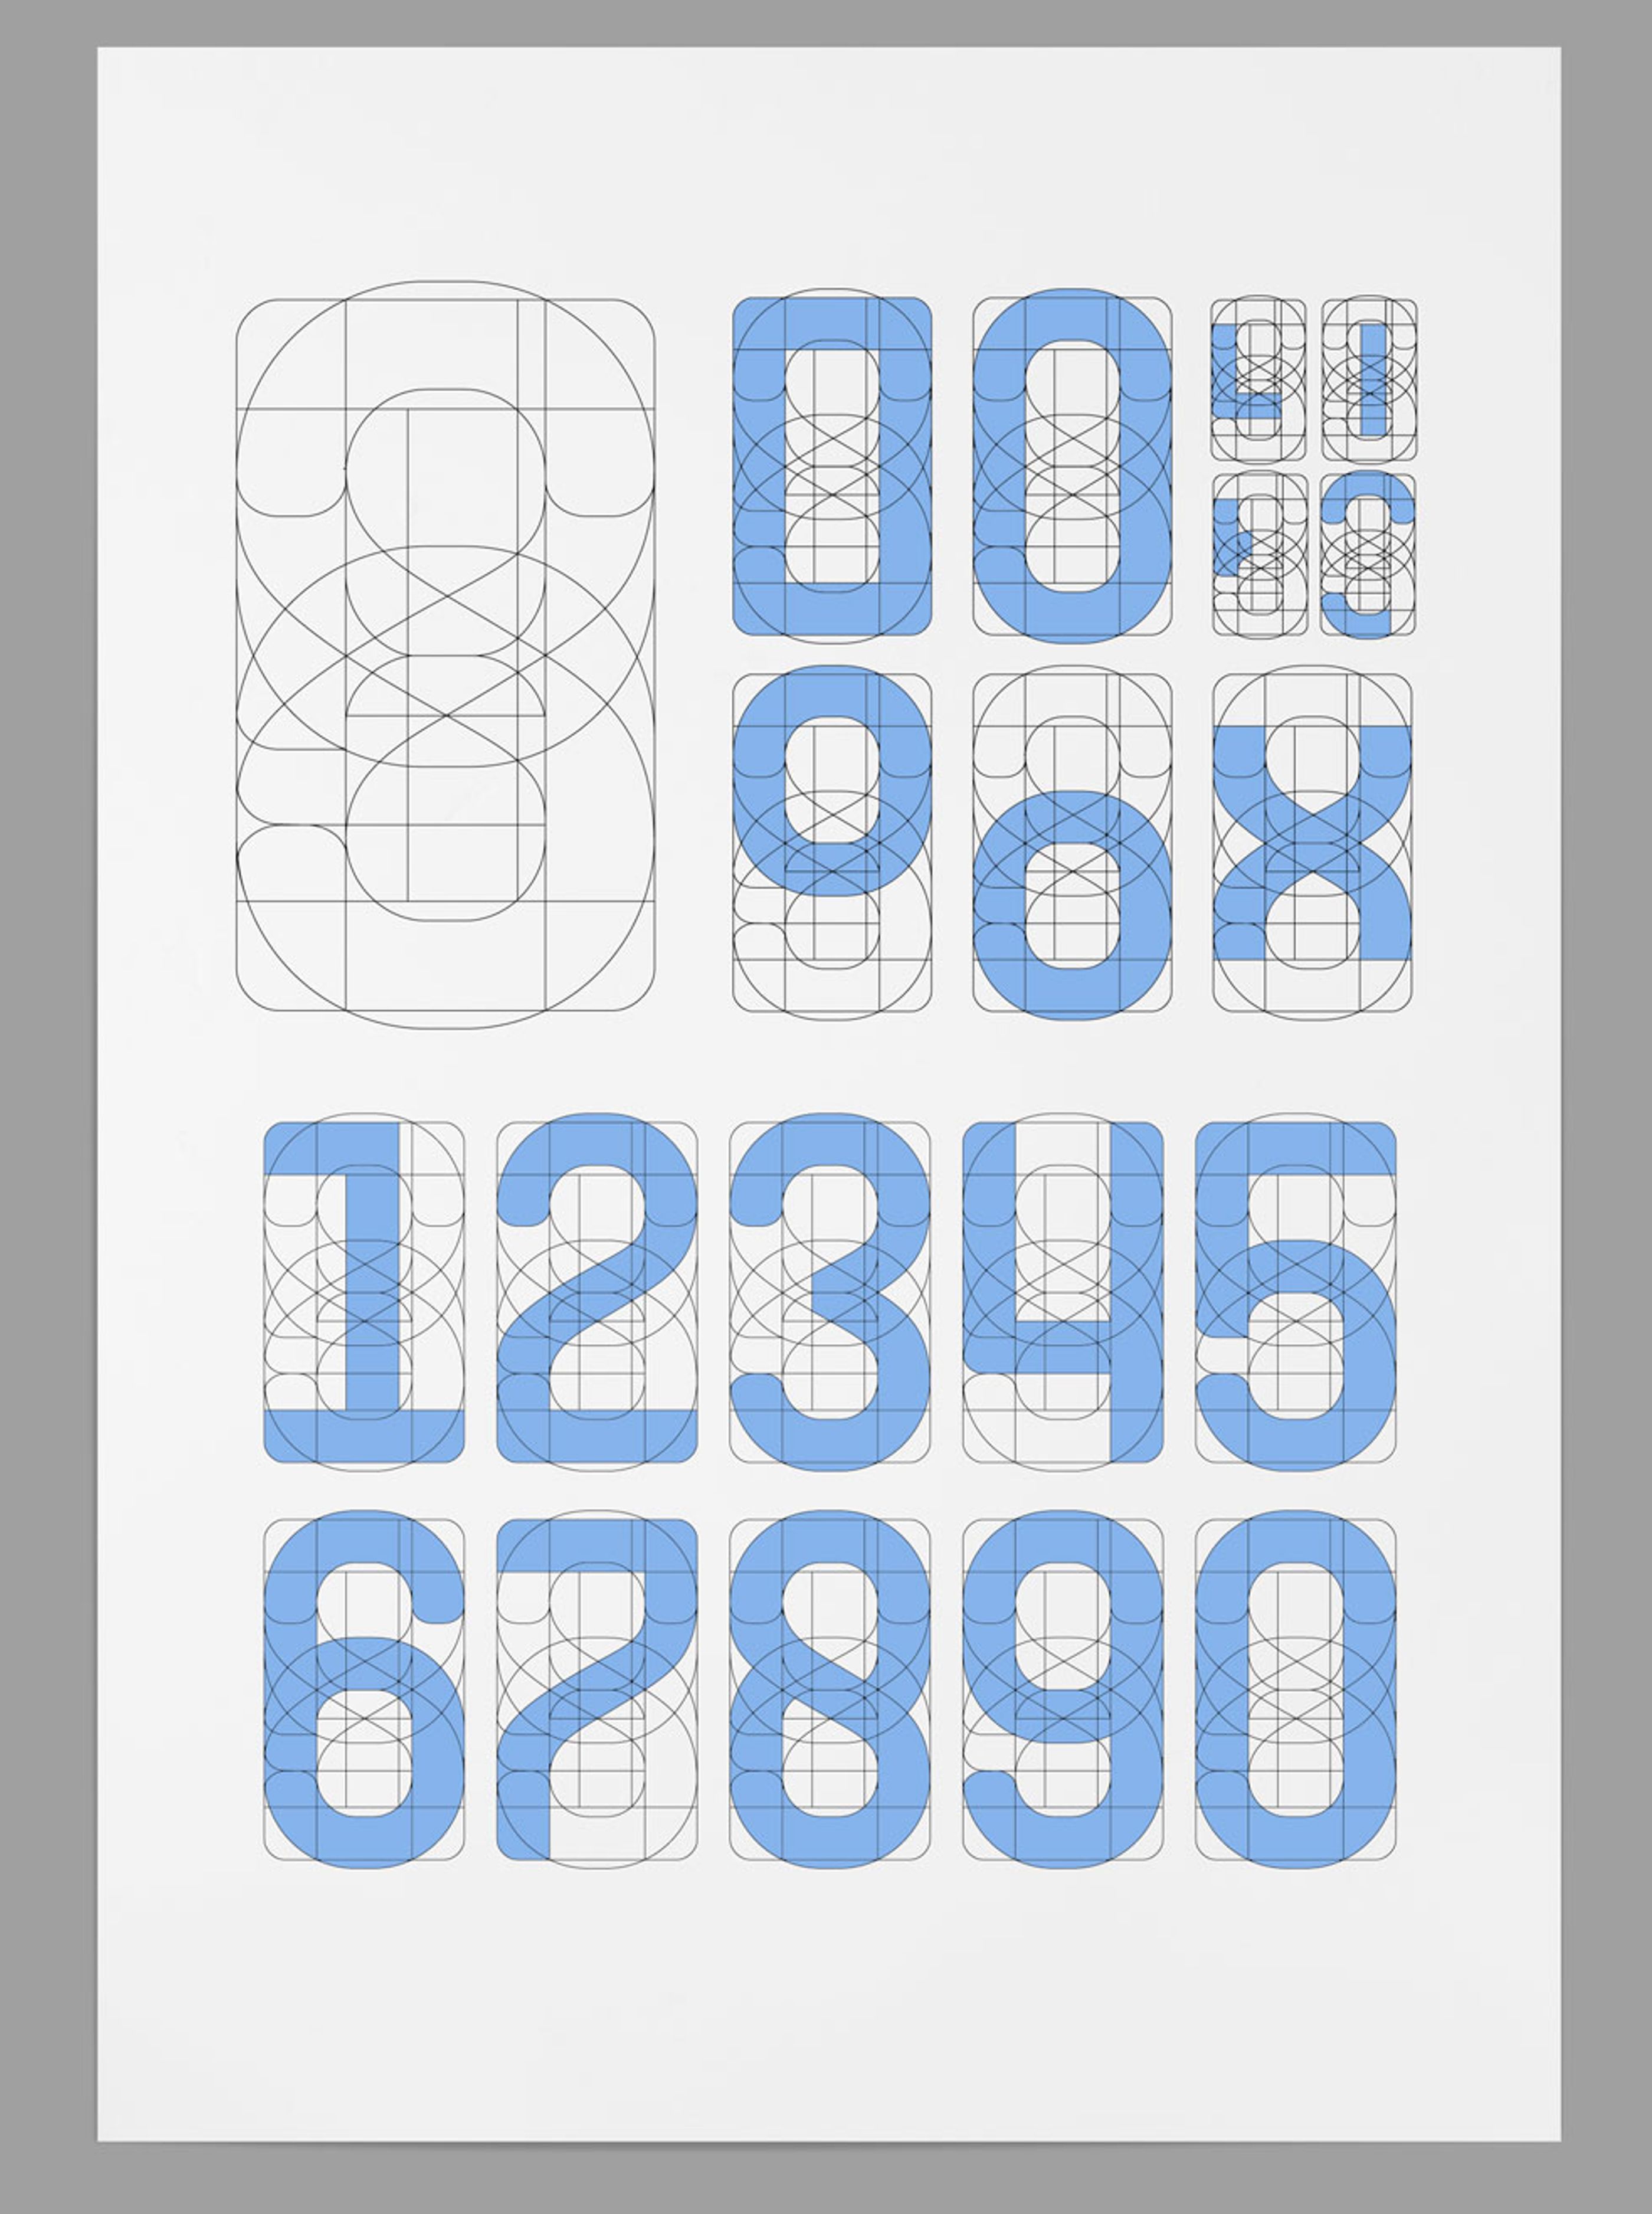 Type design for Suunto, in collaboration with Akiem Helming from type studio “Underware”